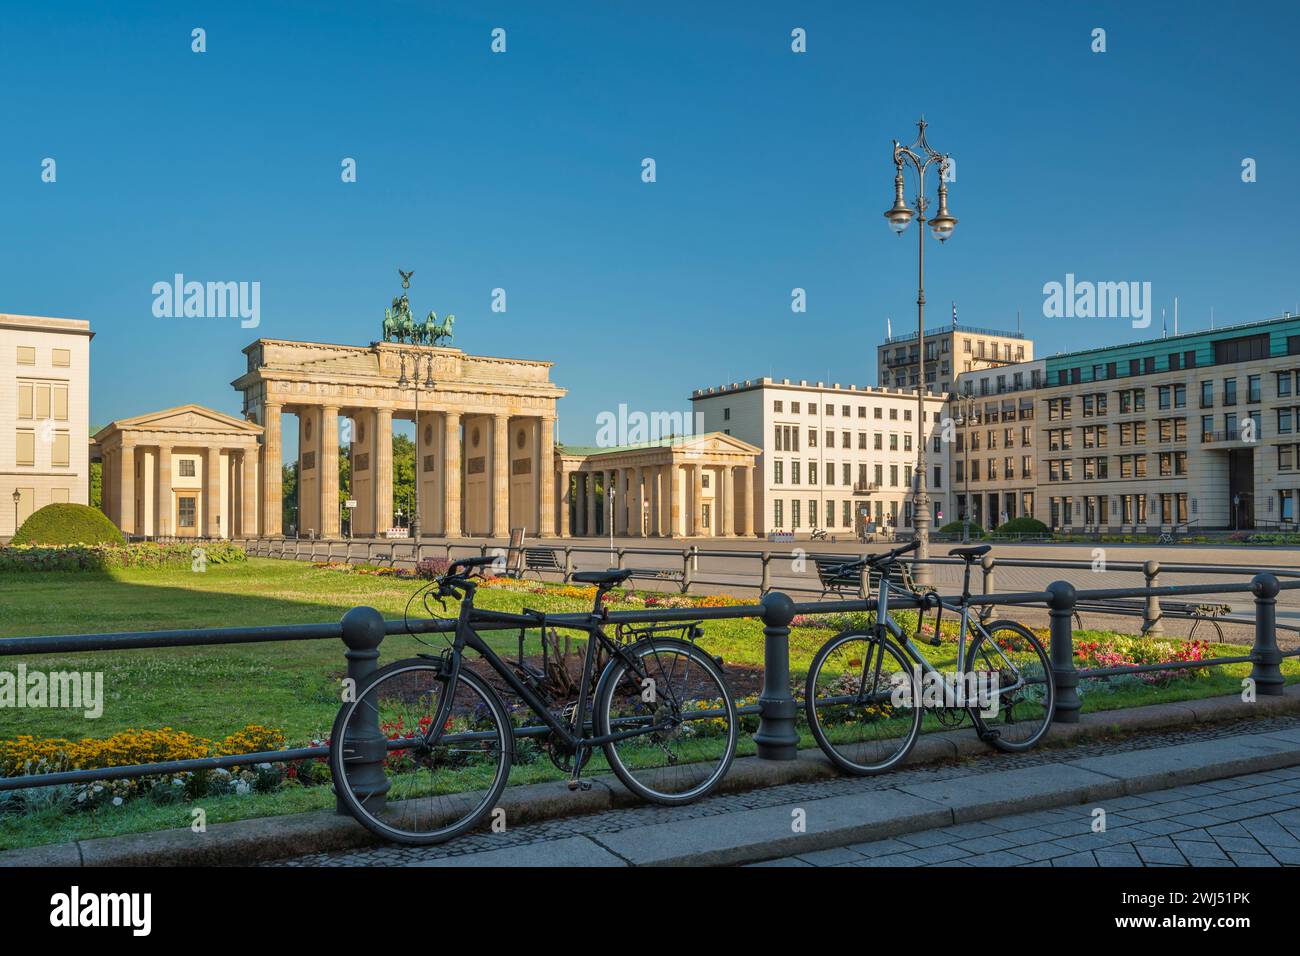 Berlin Germany, city skyline at Brandenburg Gate (Brandenburger Tor) Stock Photo